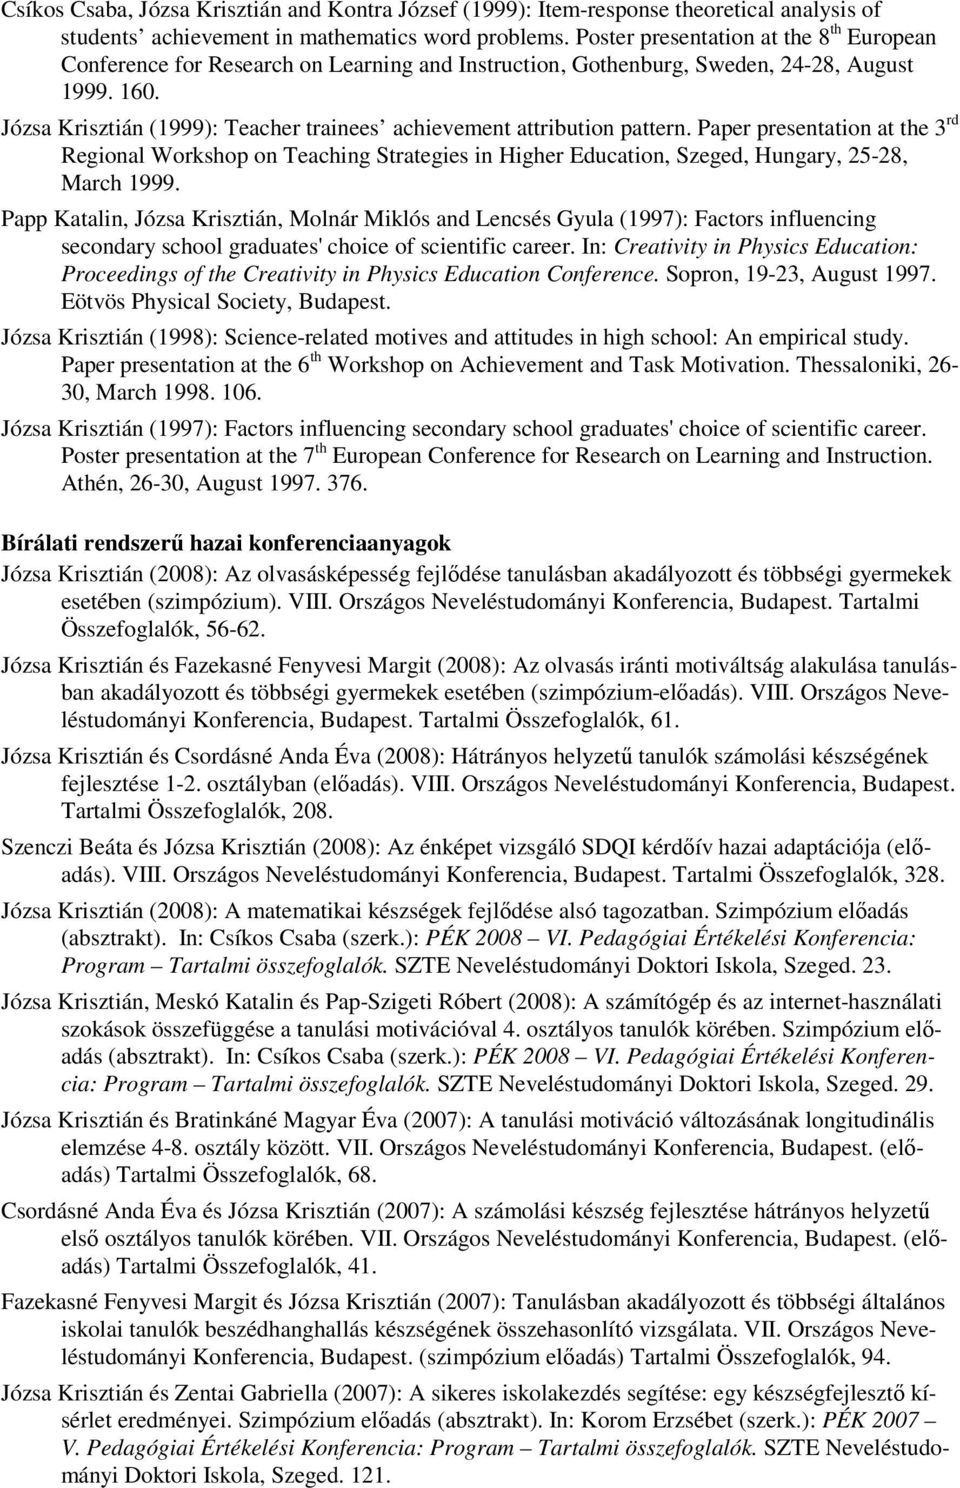 Józsa Krisztián (1999): Teacher trainees achievement attribution pattern.